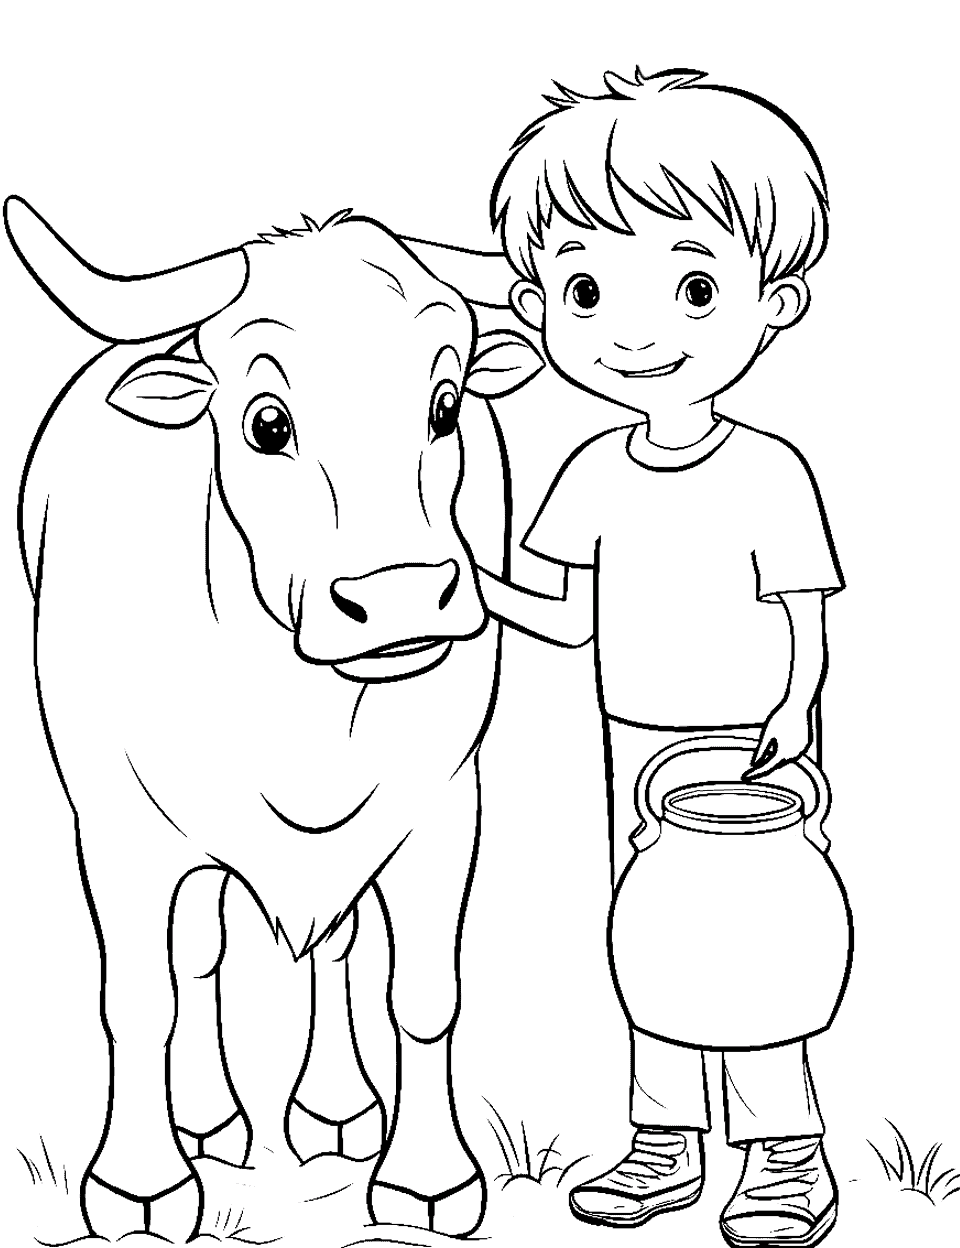 Cow drawing kids Vectors & Illustrations for Free Download | Freepik